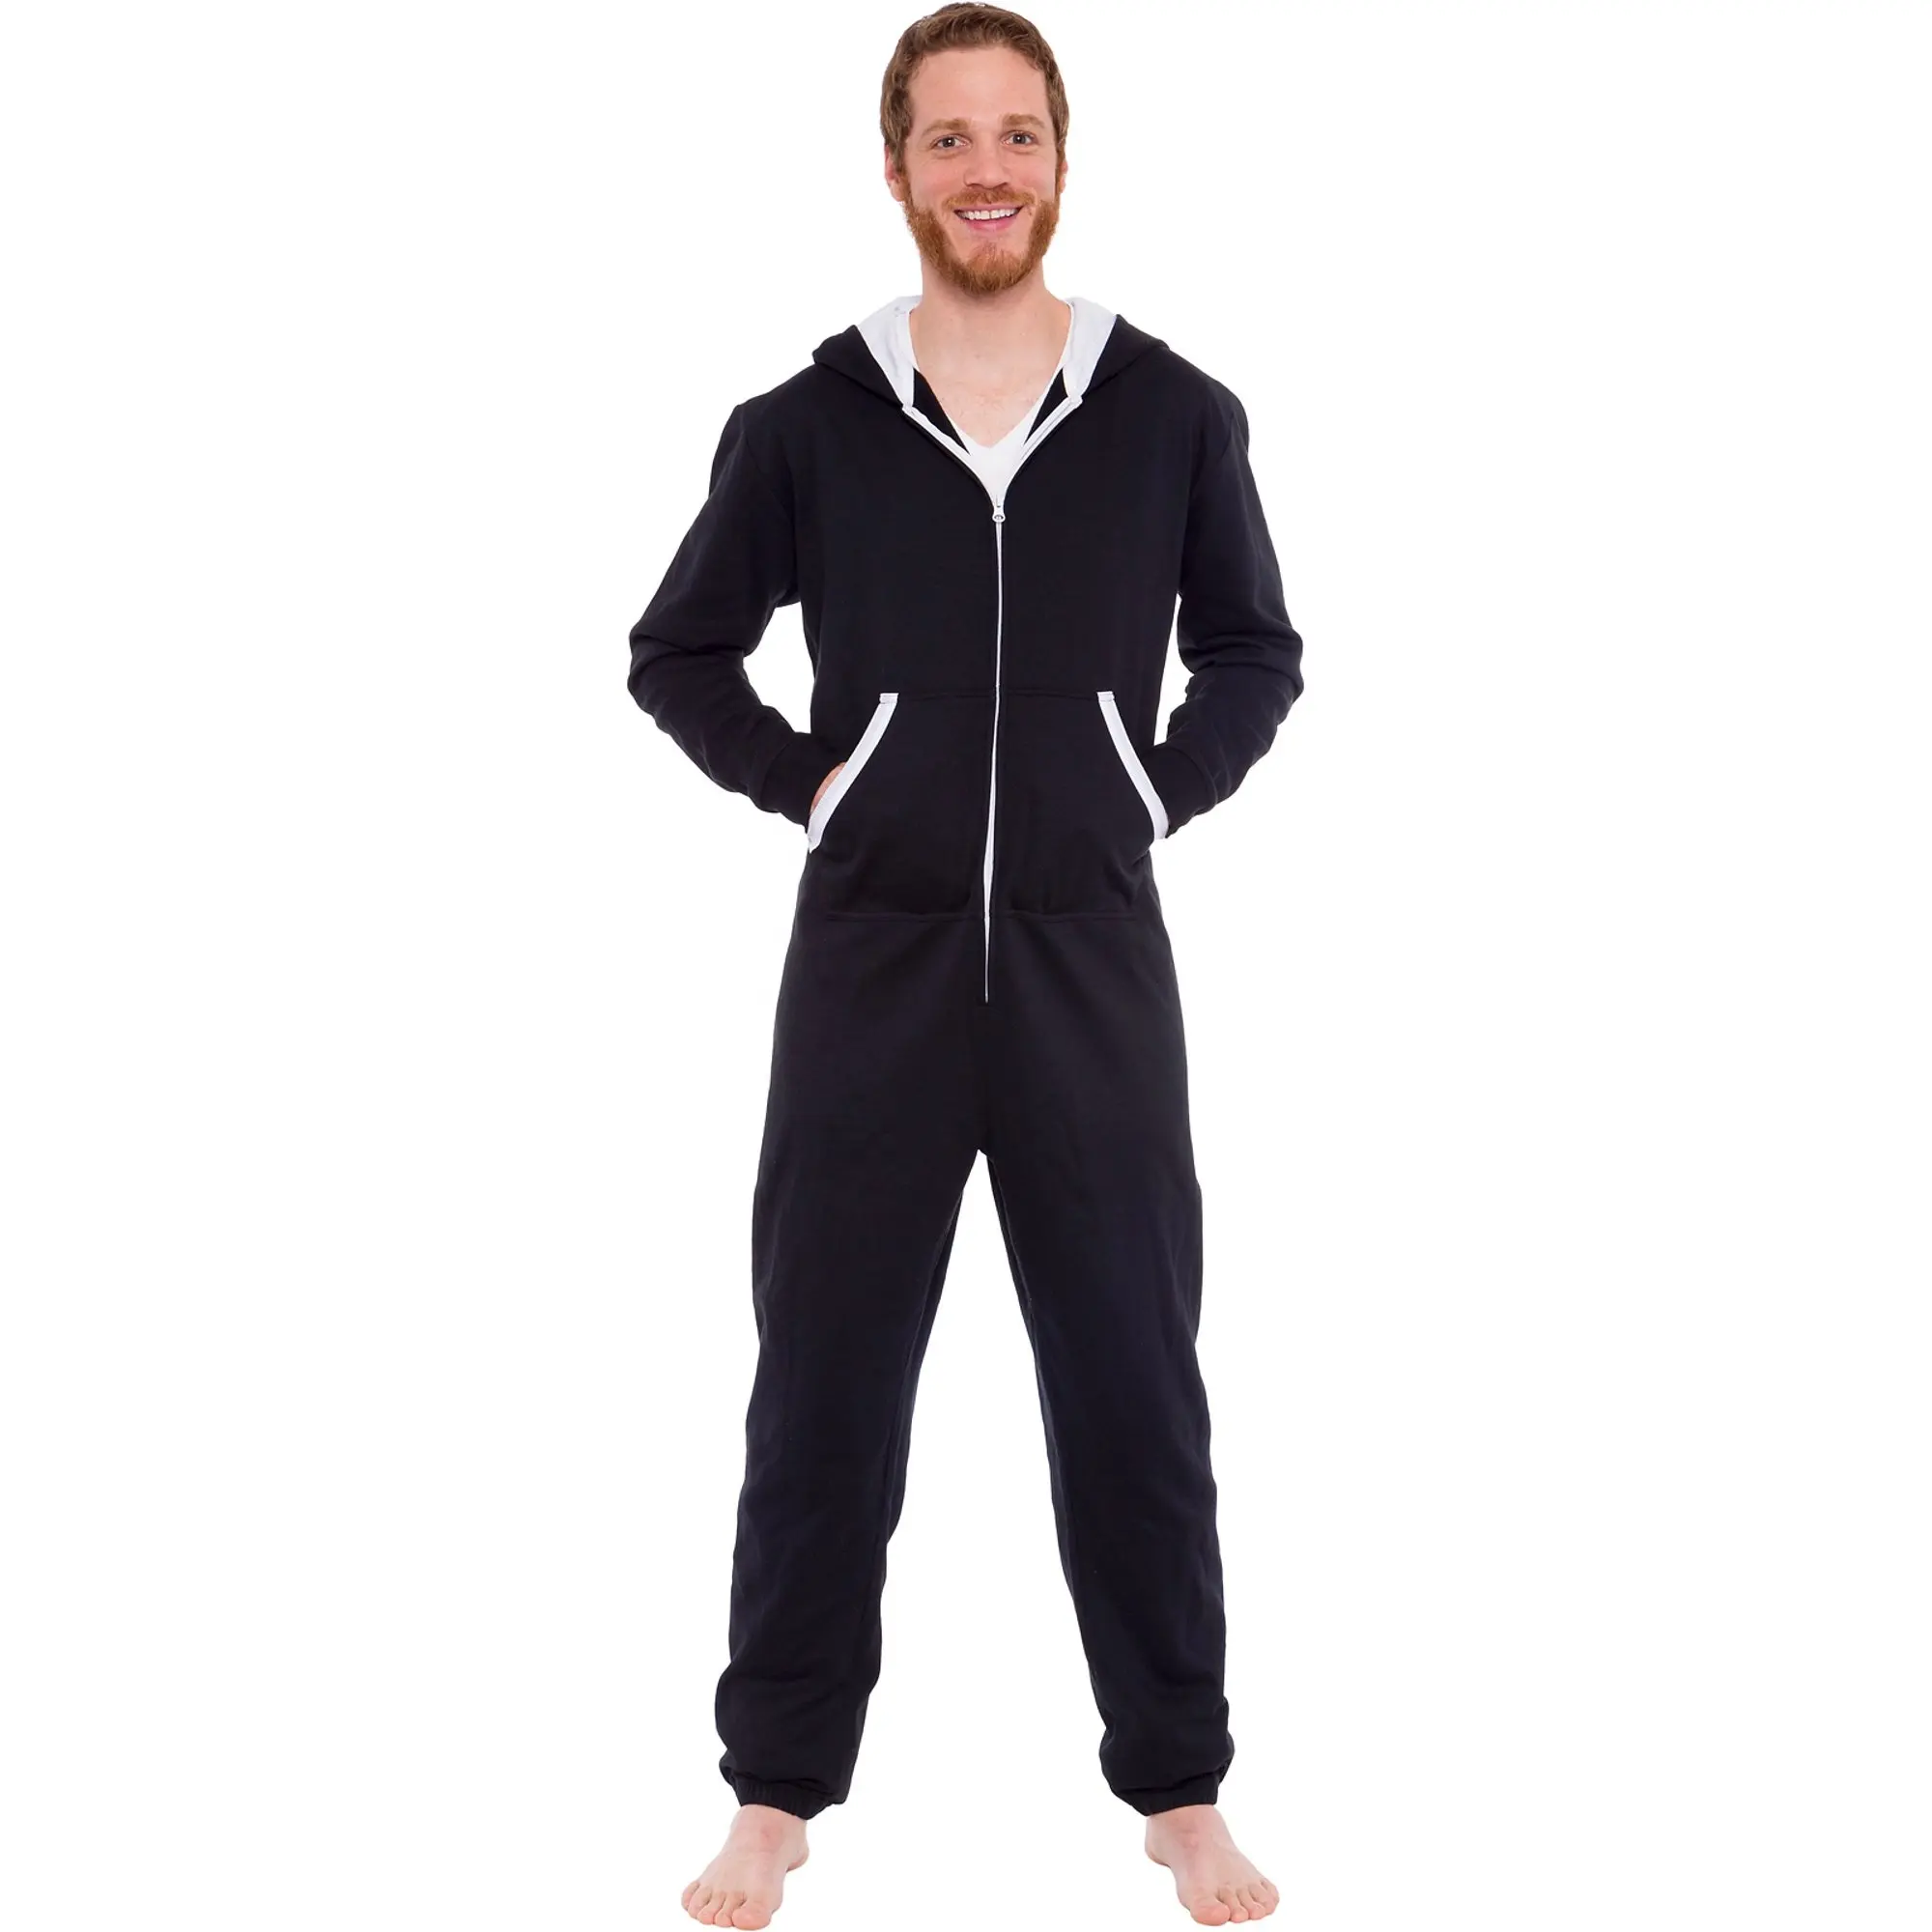 Jumpsuit Onesie Pria-Jumpsuit Bulu Domba-Piyama-Pakaian Tidur-Onesie untuk Musim Baru-Gaun Malam